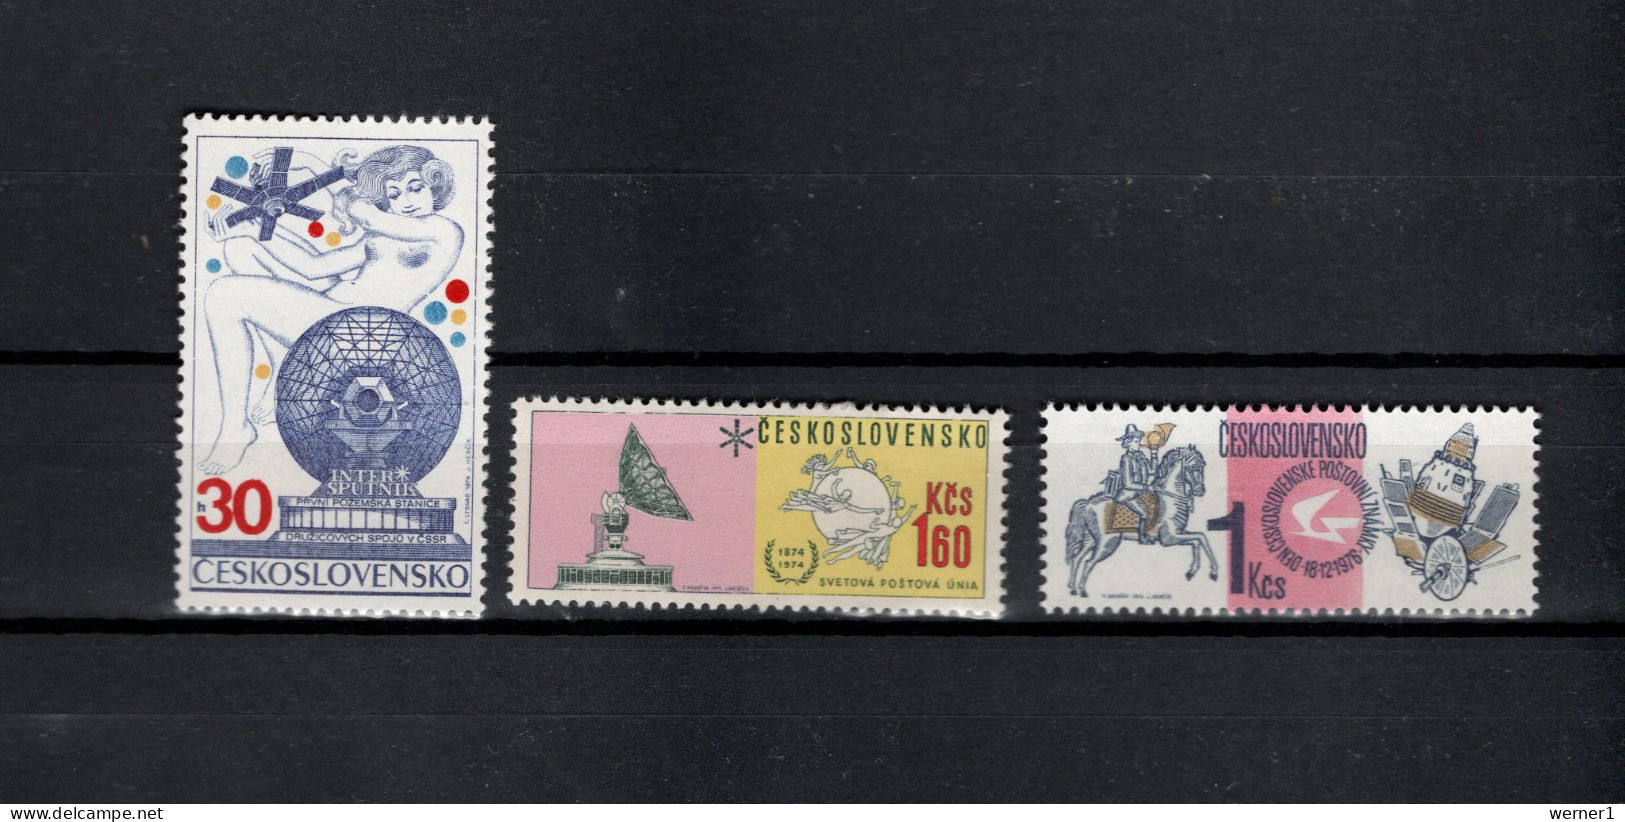 Czechoslovakia 1974/1976 Space, Intersputnik, UPU Centenary, Stamp Day 3 Stamps MNH - Europe